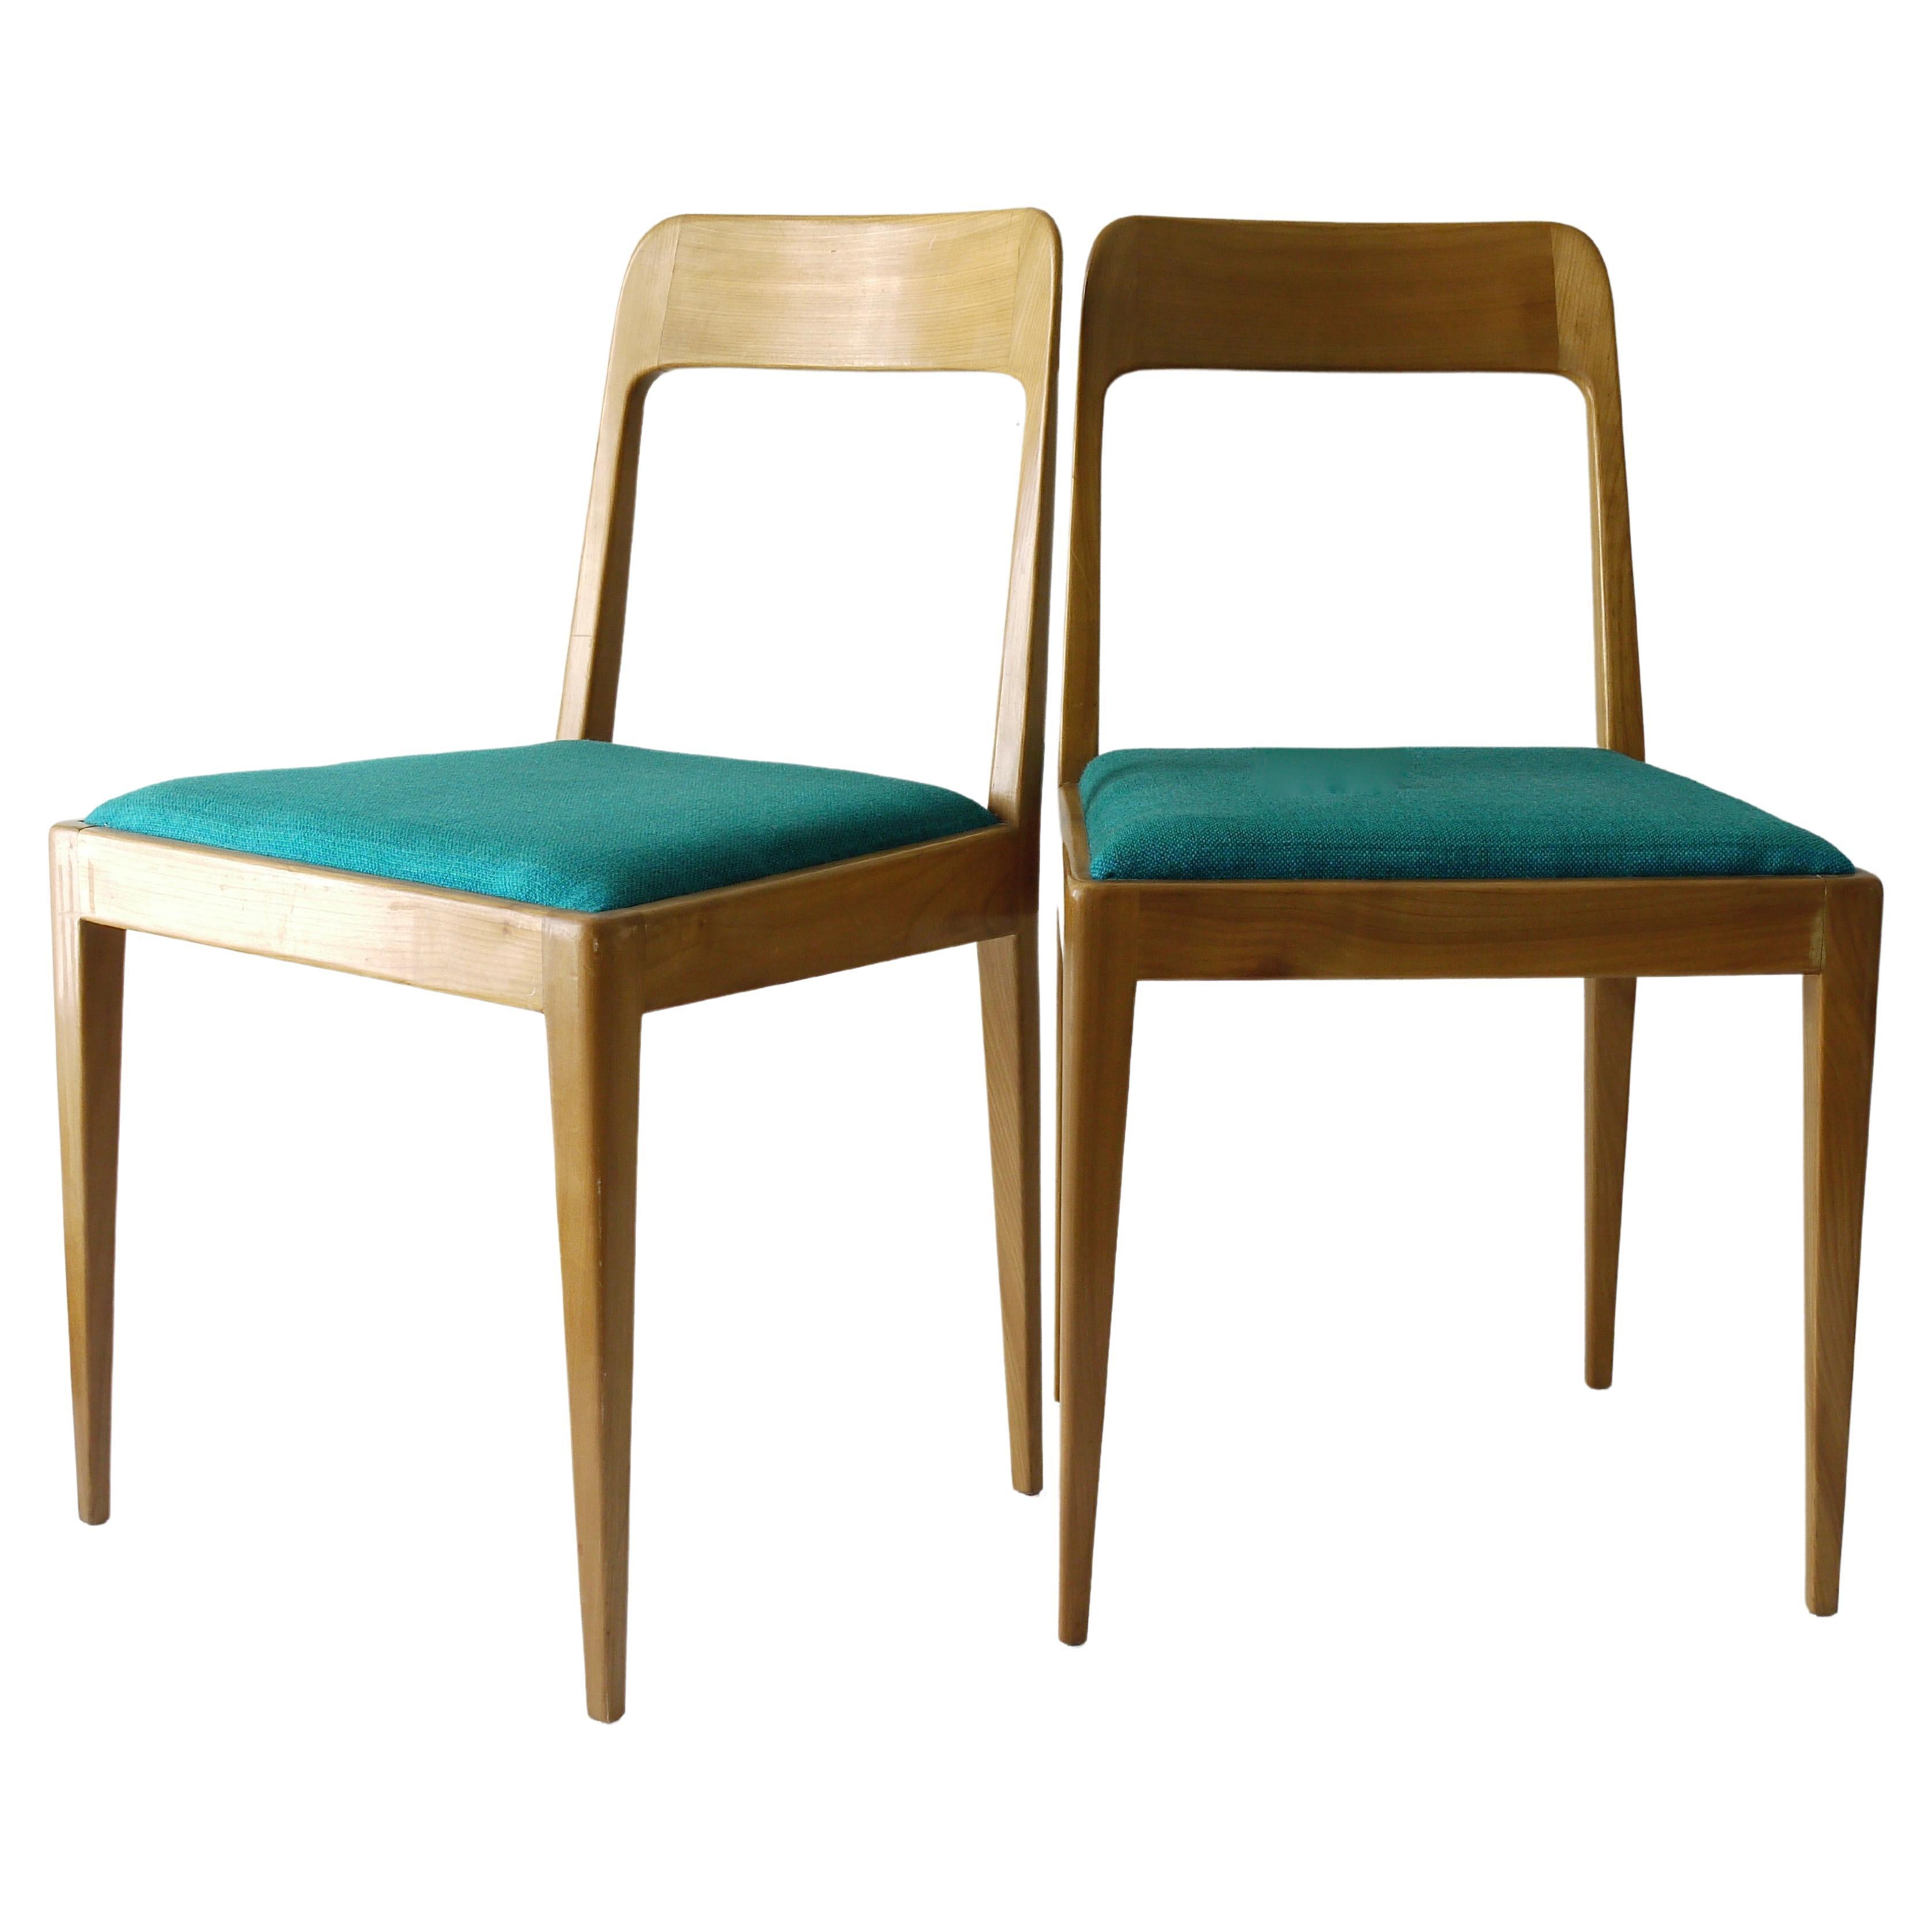 Four Carl Aubock Midcentury Walnut Chairs A7, Vienna, Austria, 1950s For Sale